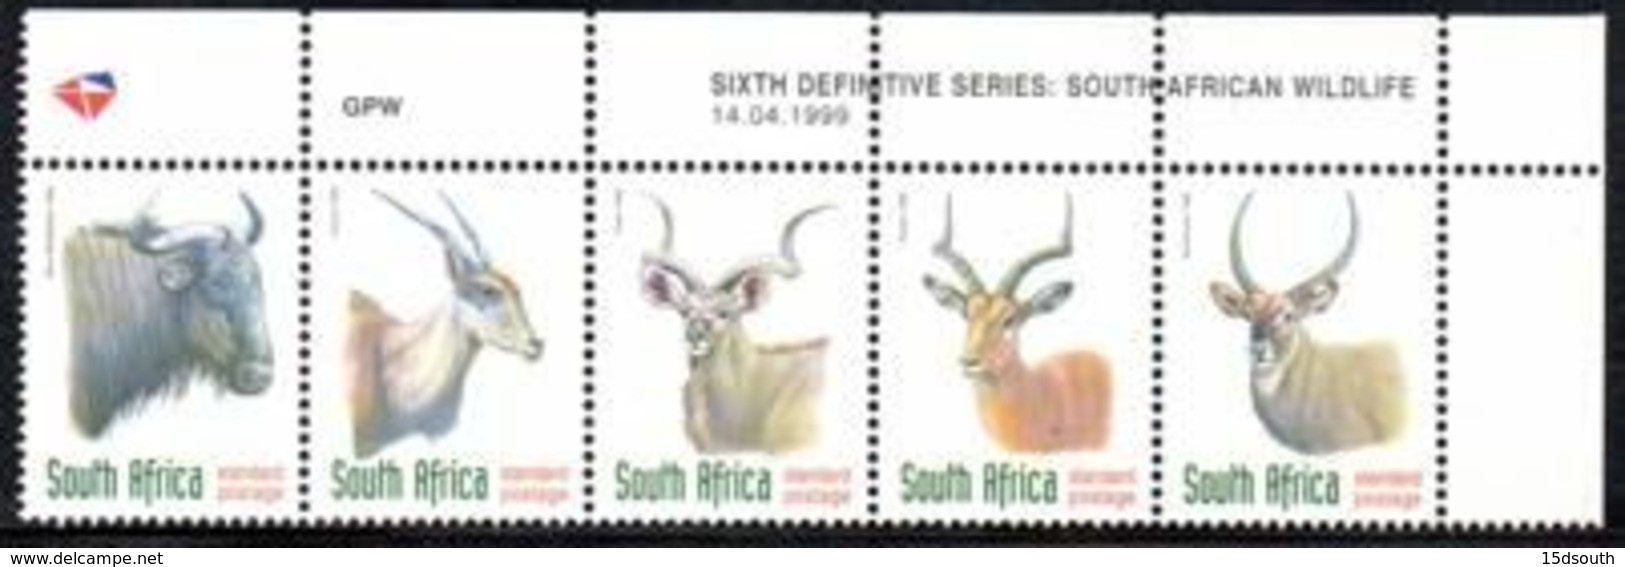 South Africa - 1999 Redrawn 6th Definitive SPR Antelopes Control Block (1999.04.14) (**) - Blocks & Sheetlets